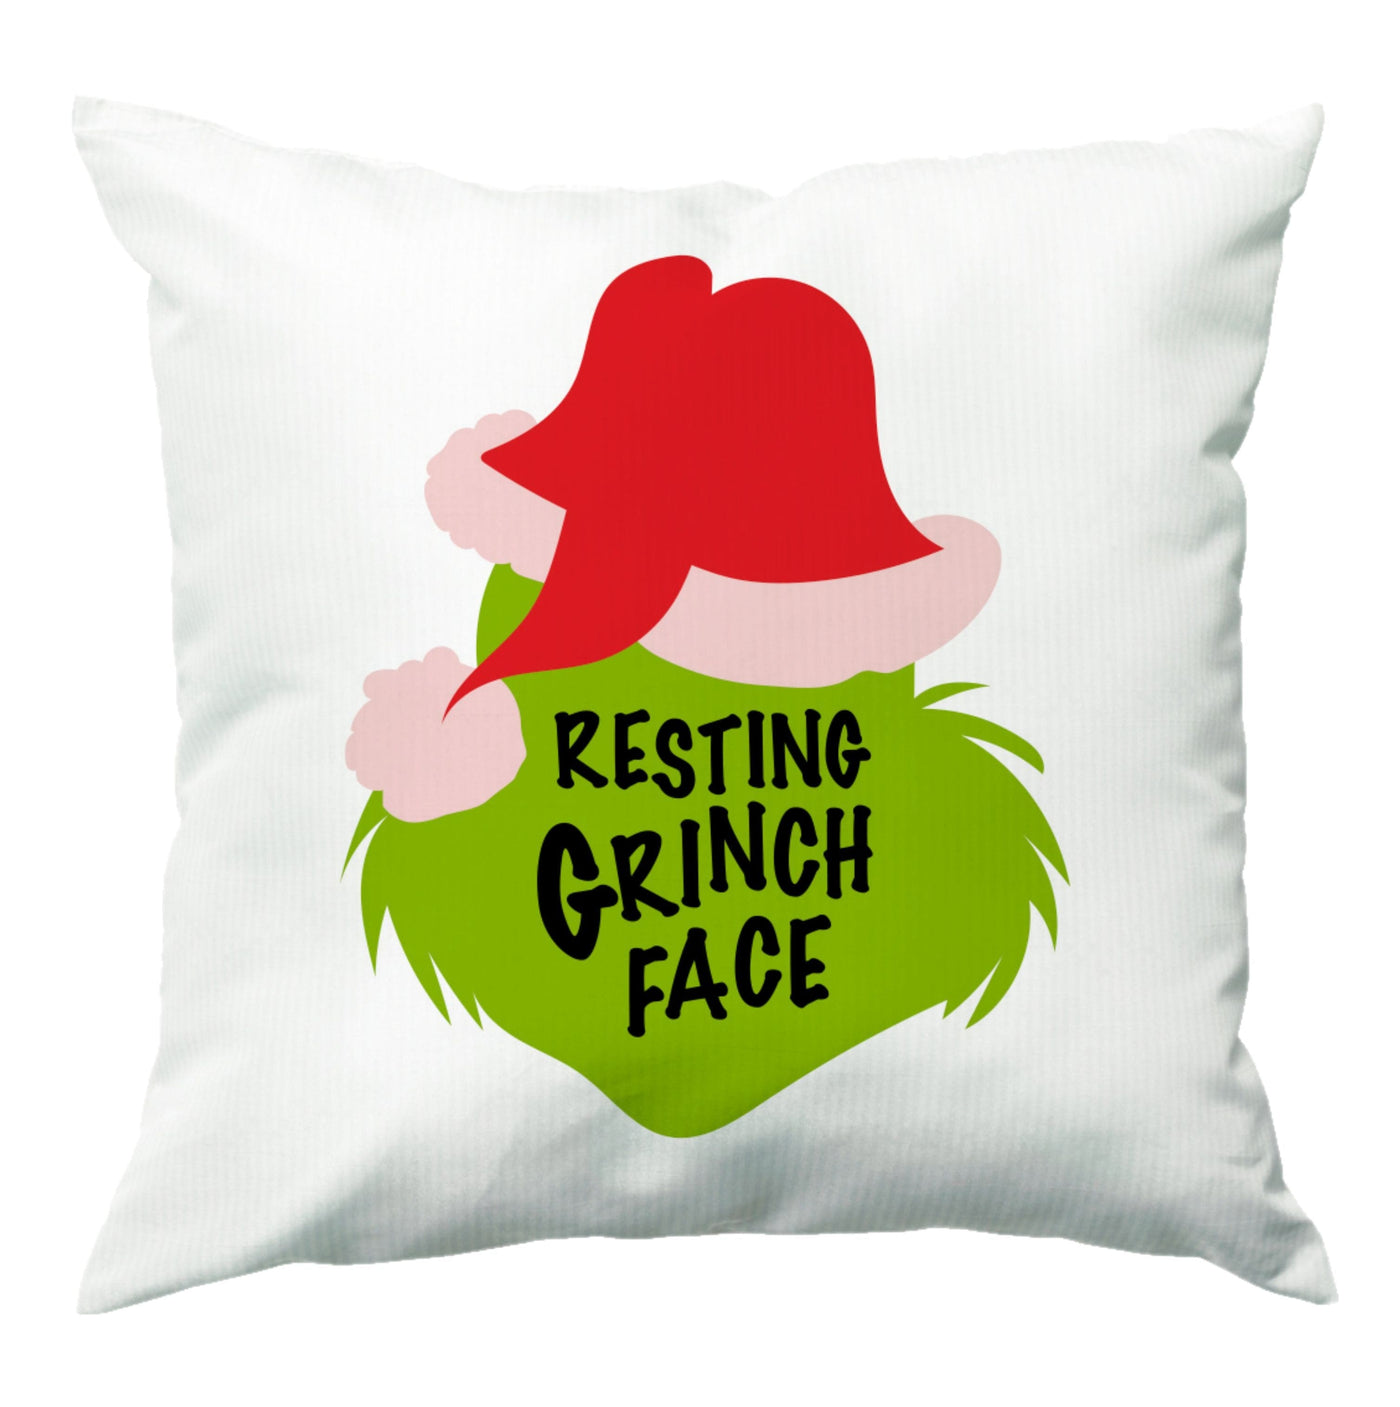 Resting Grinch Face Cushion